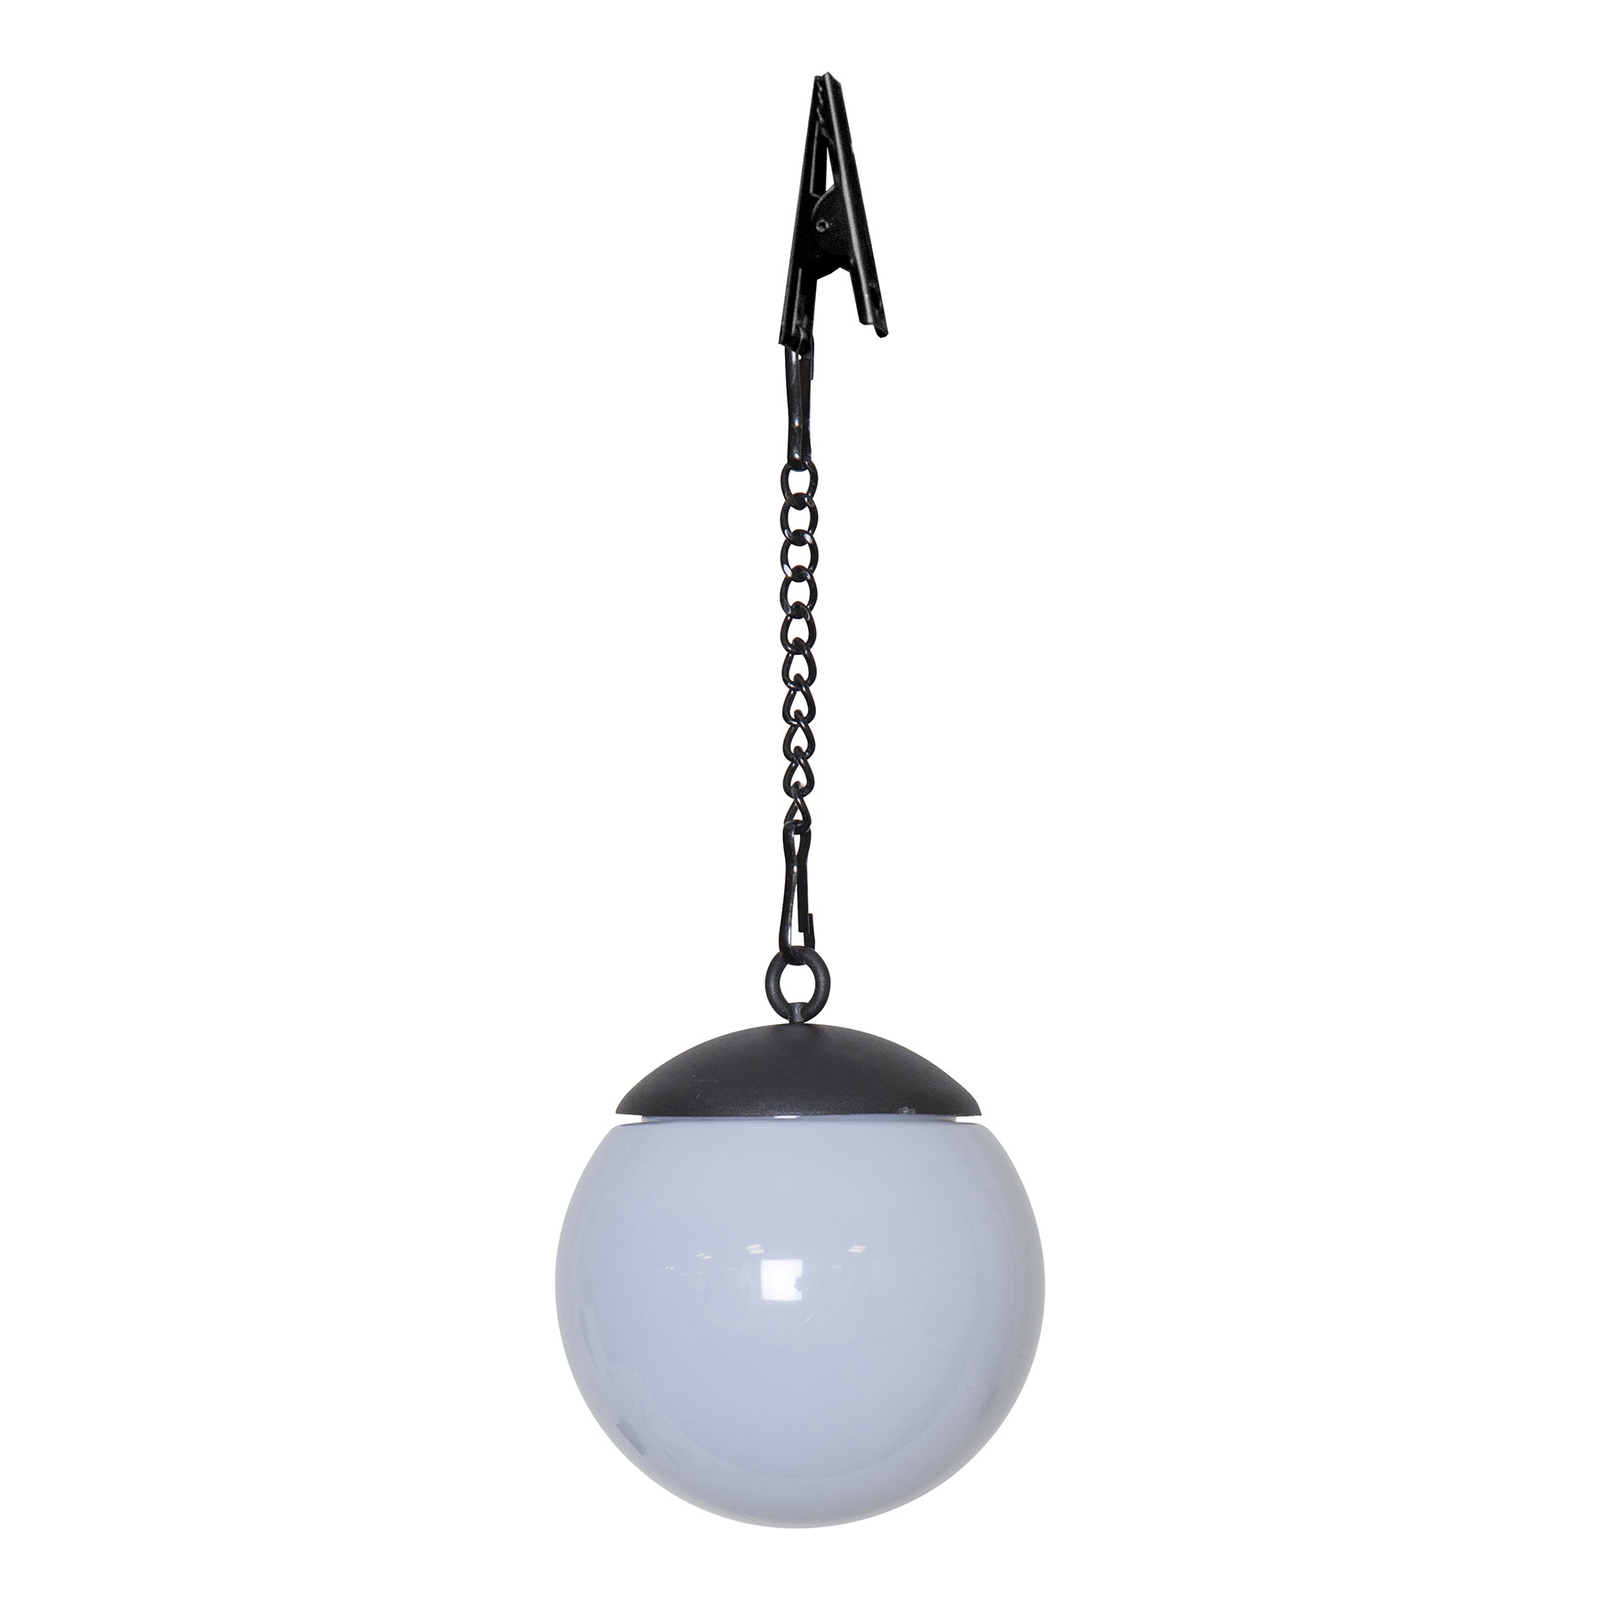 Globus LED solar pendant light in a set of 4